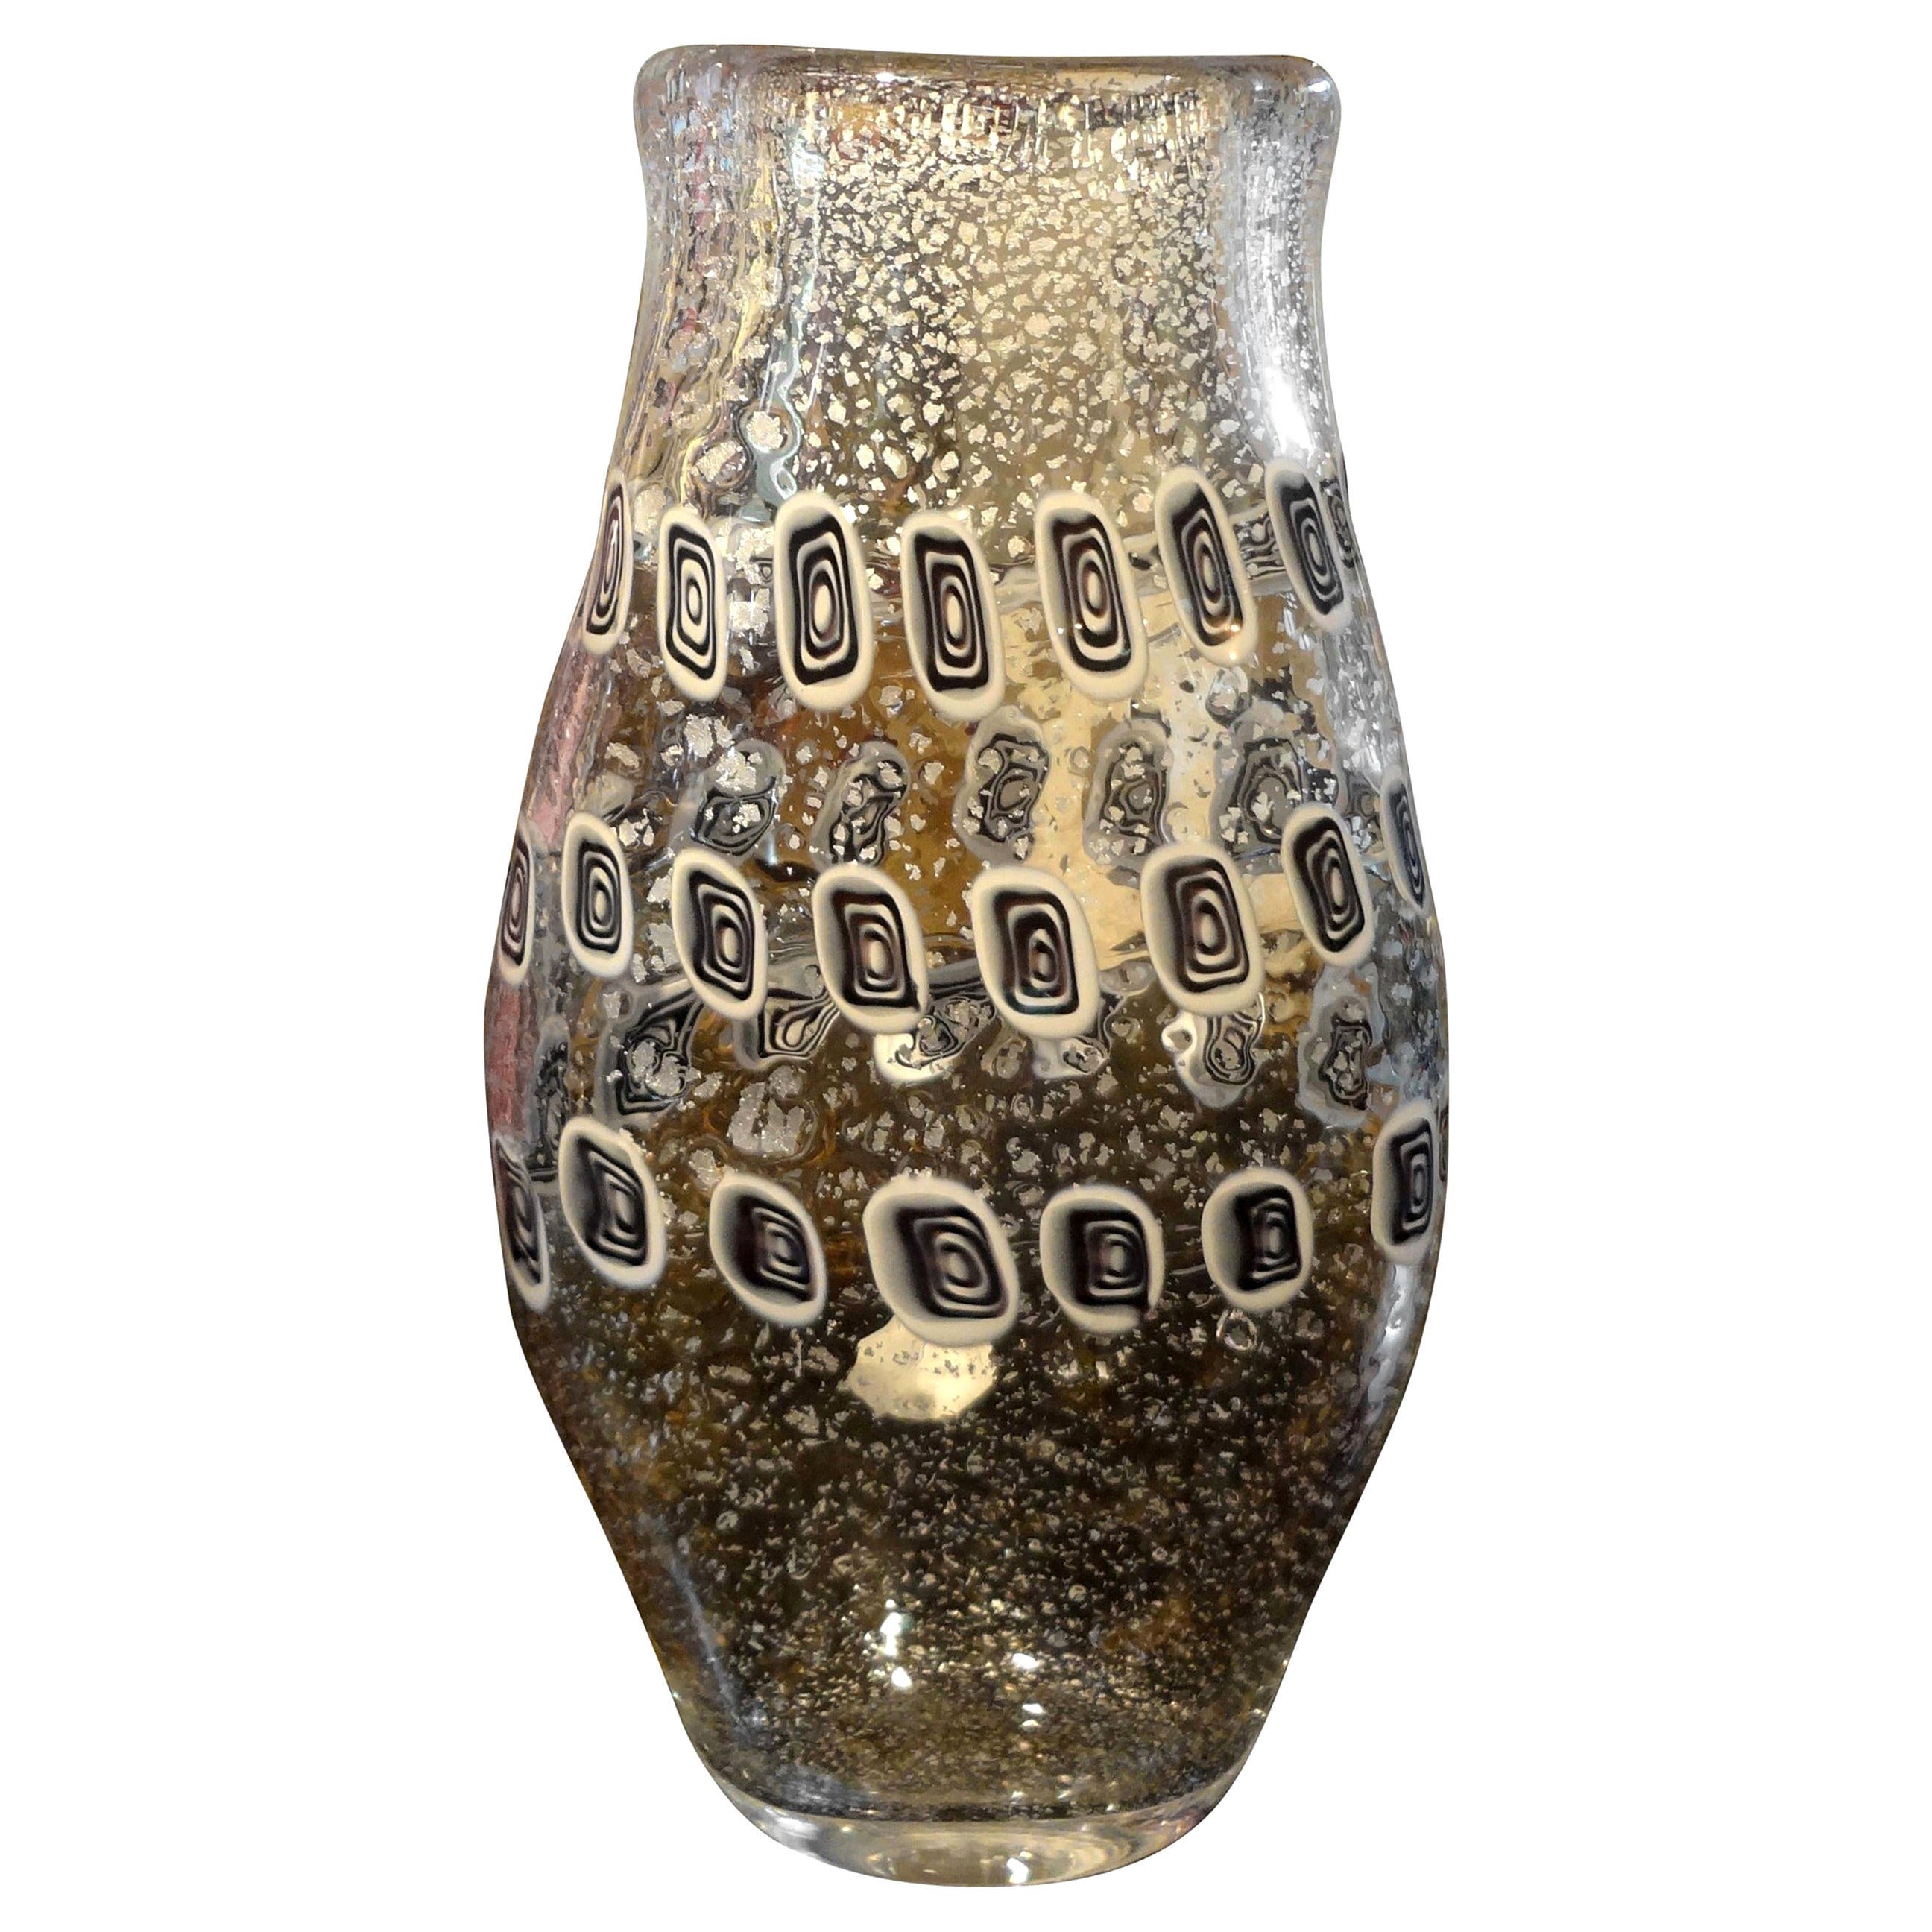 Midcentury Black and White Murano Glass Vase by Formentello